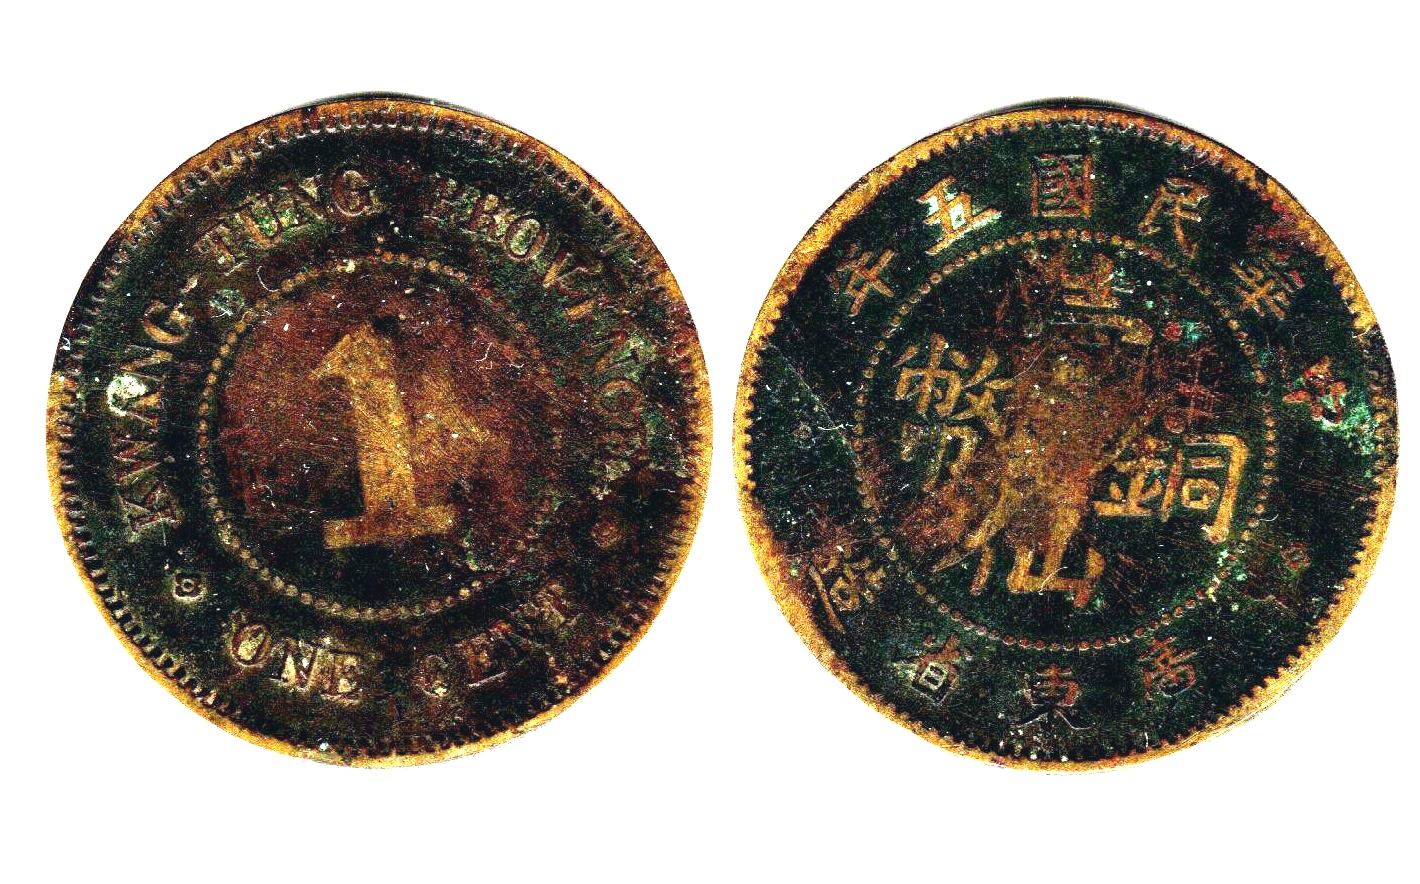 K5142, Kwang-Tung 1 Cent Bronze Coin, Republic of China 1913-1920